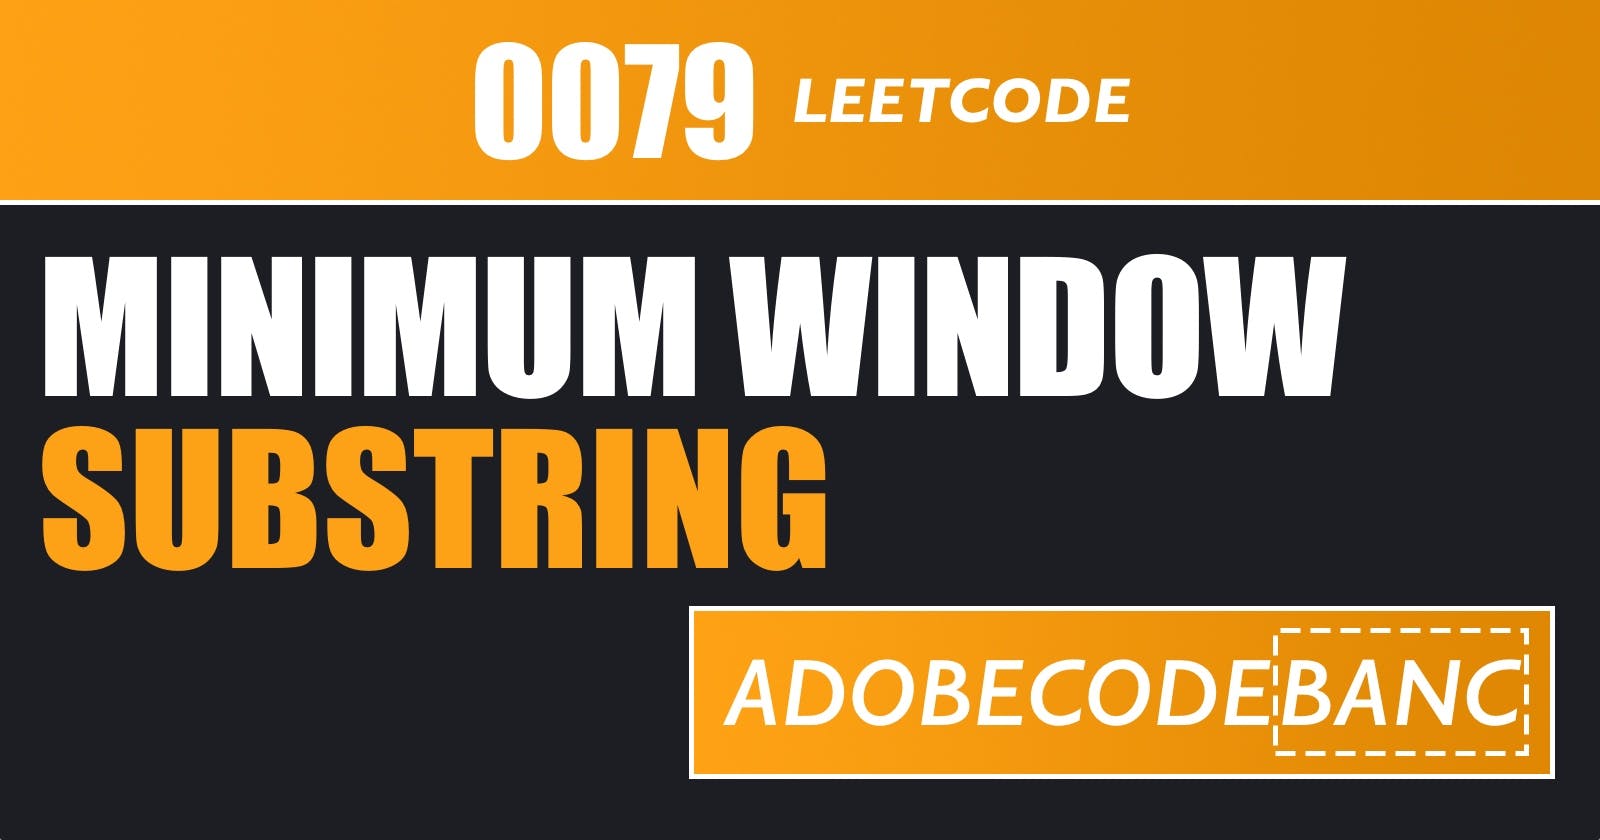 Minimum Window Substring - Leetcode 79